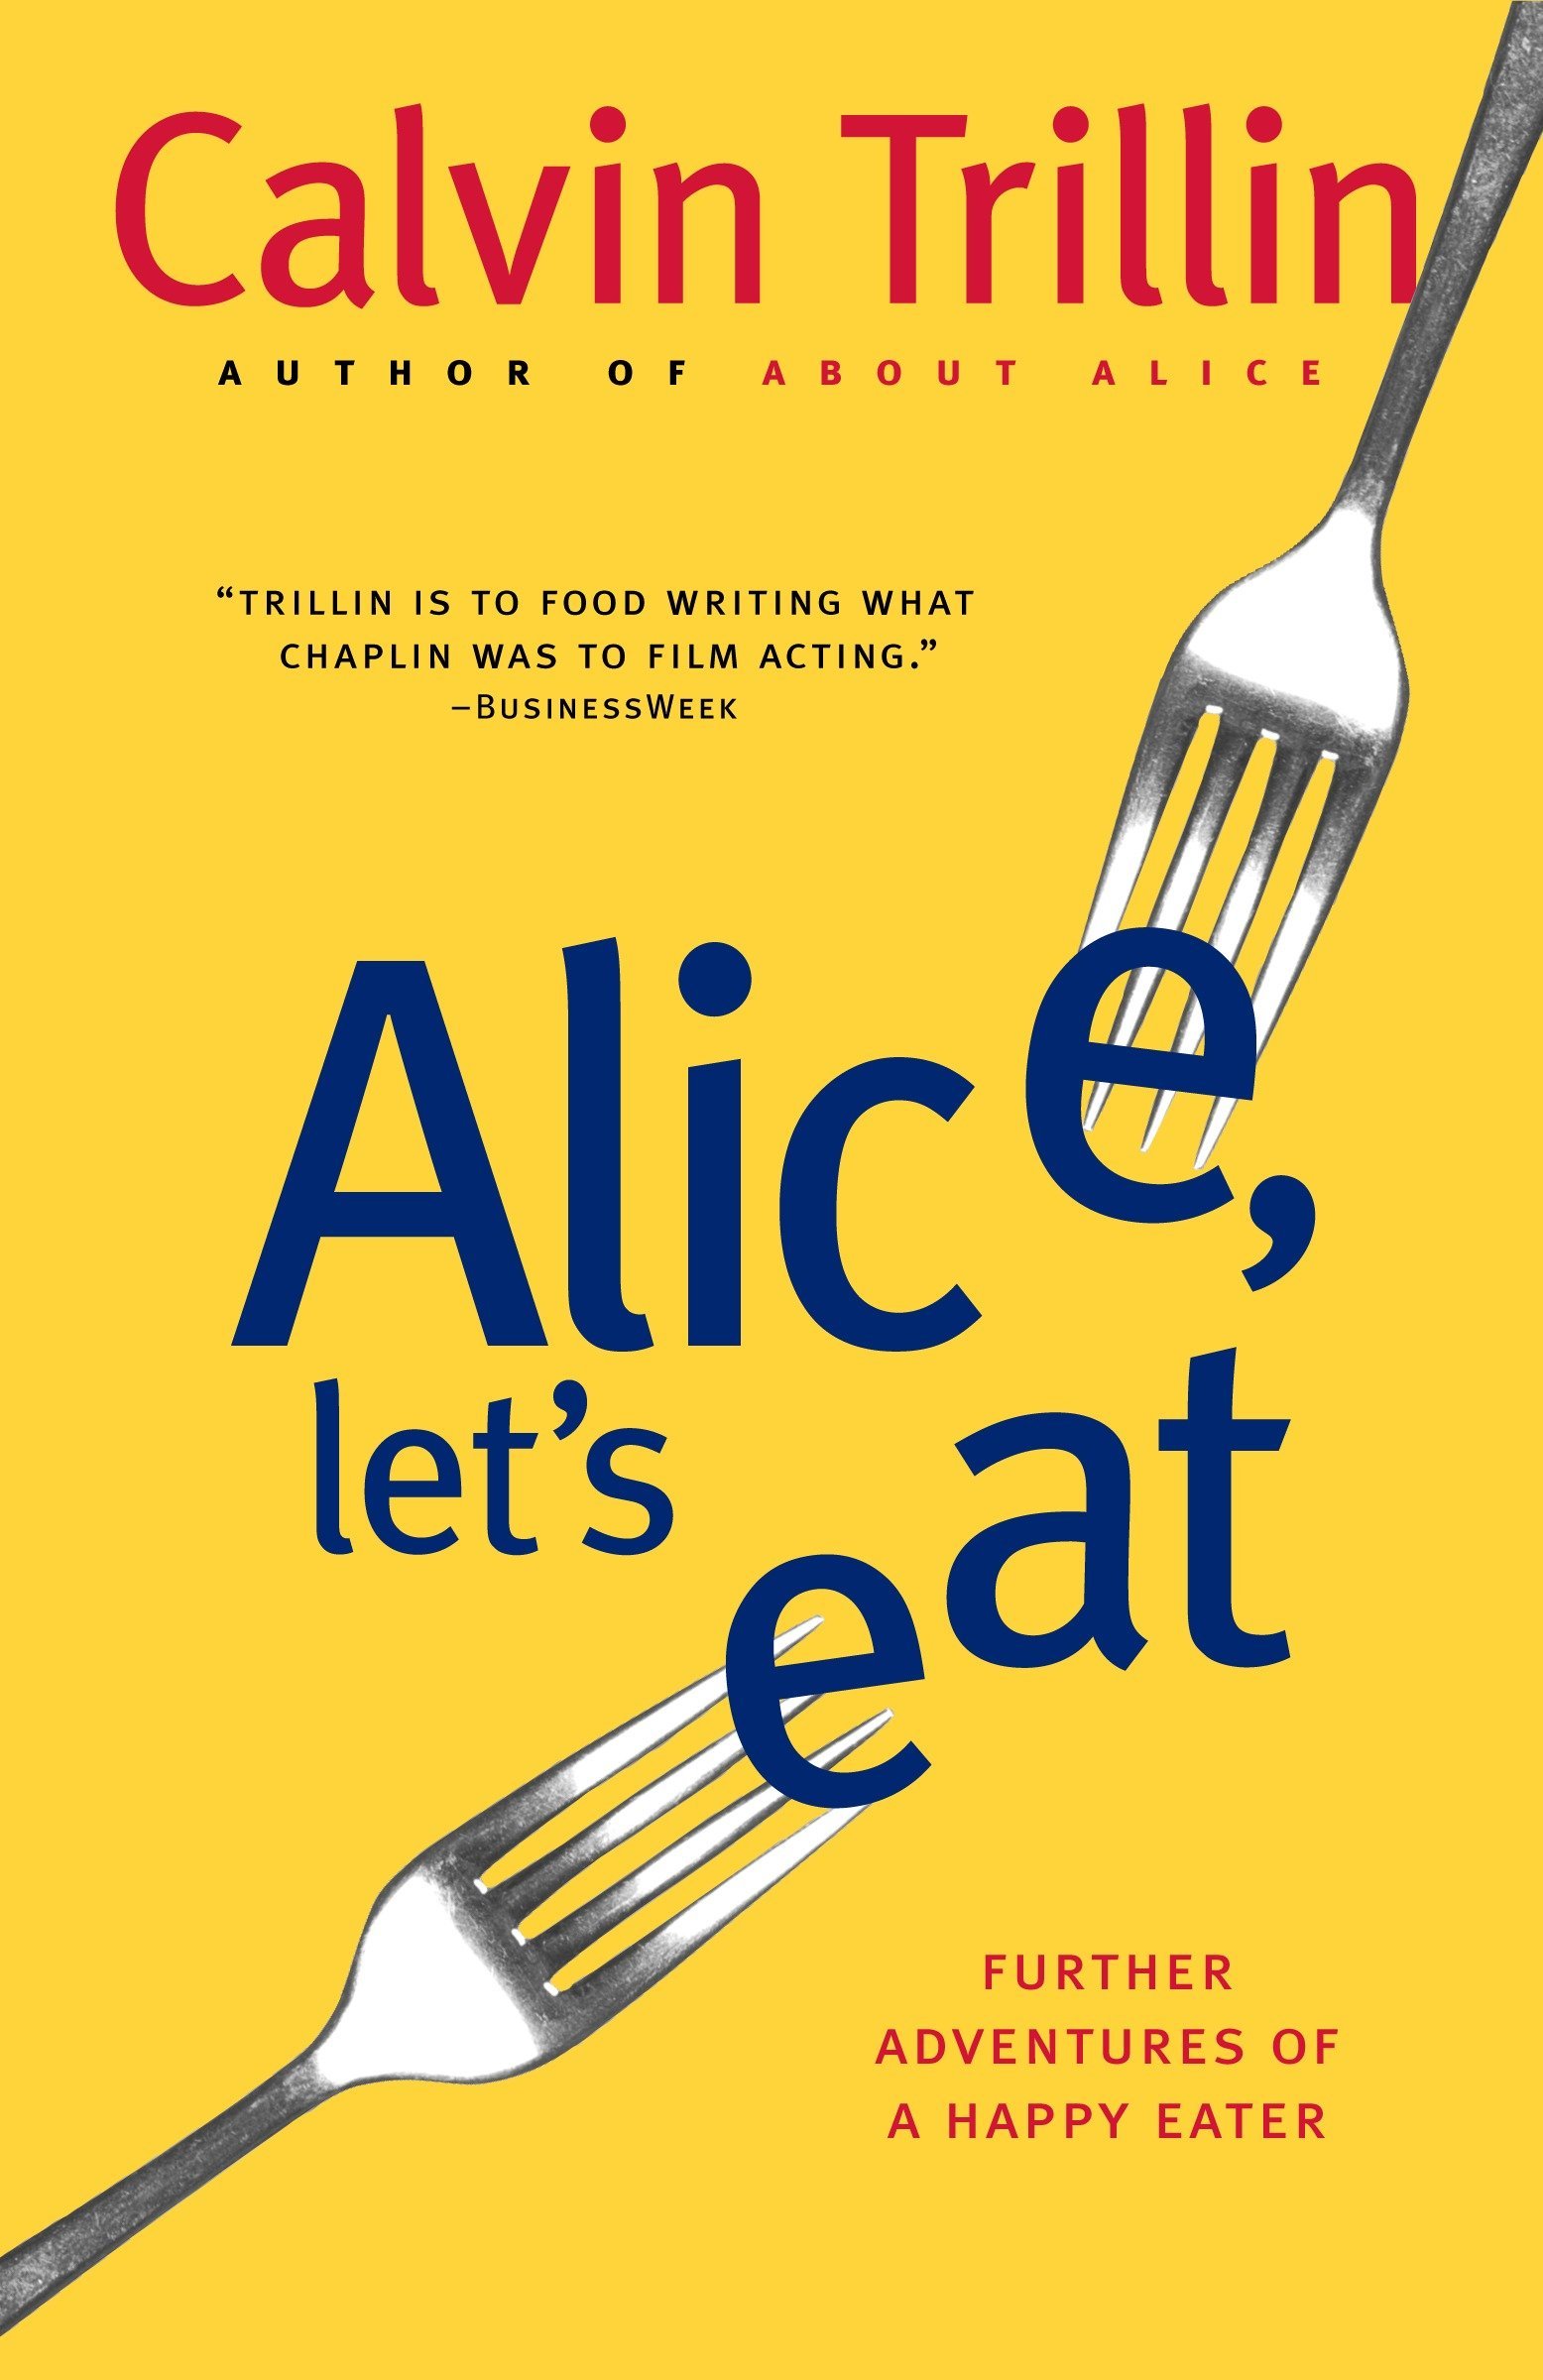 Alice, let's eat